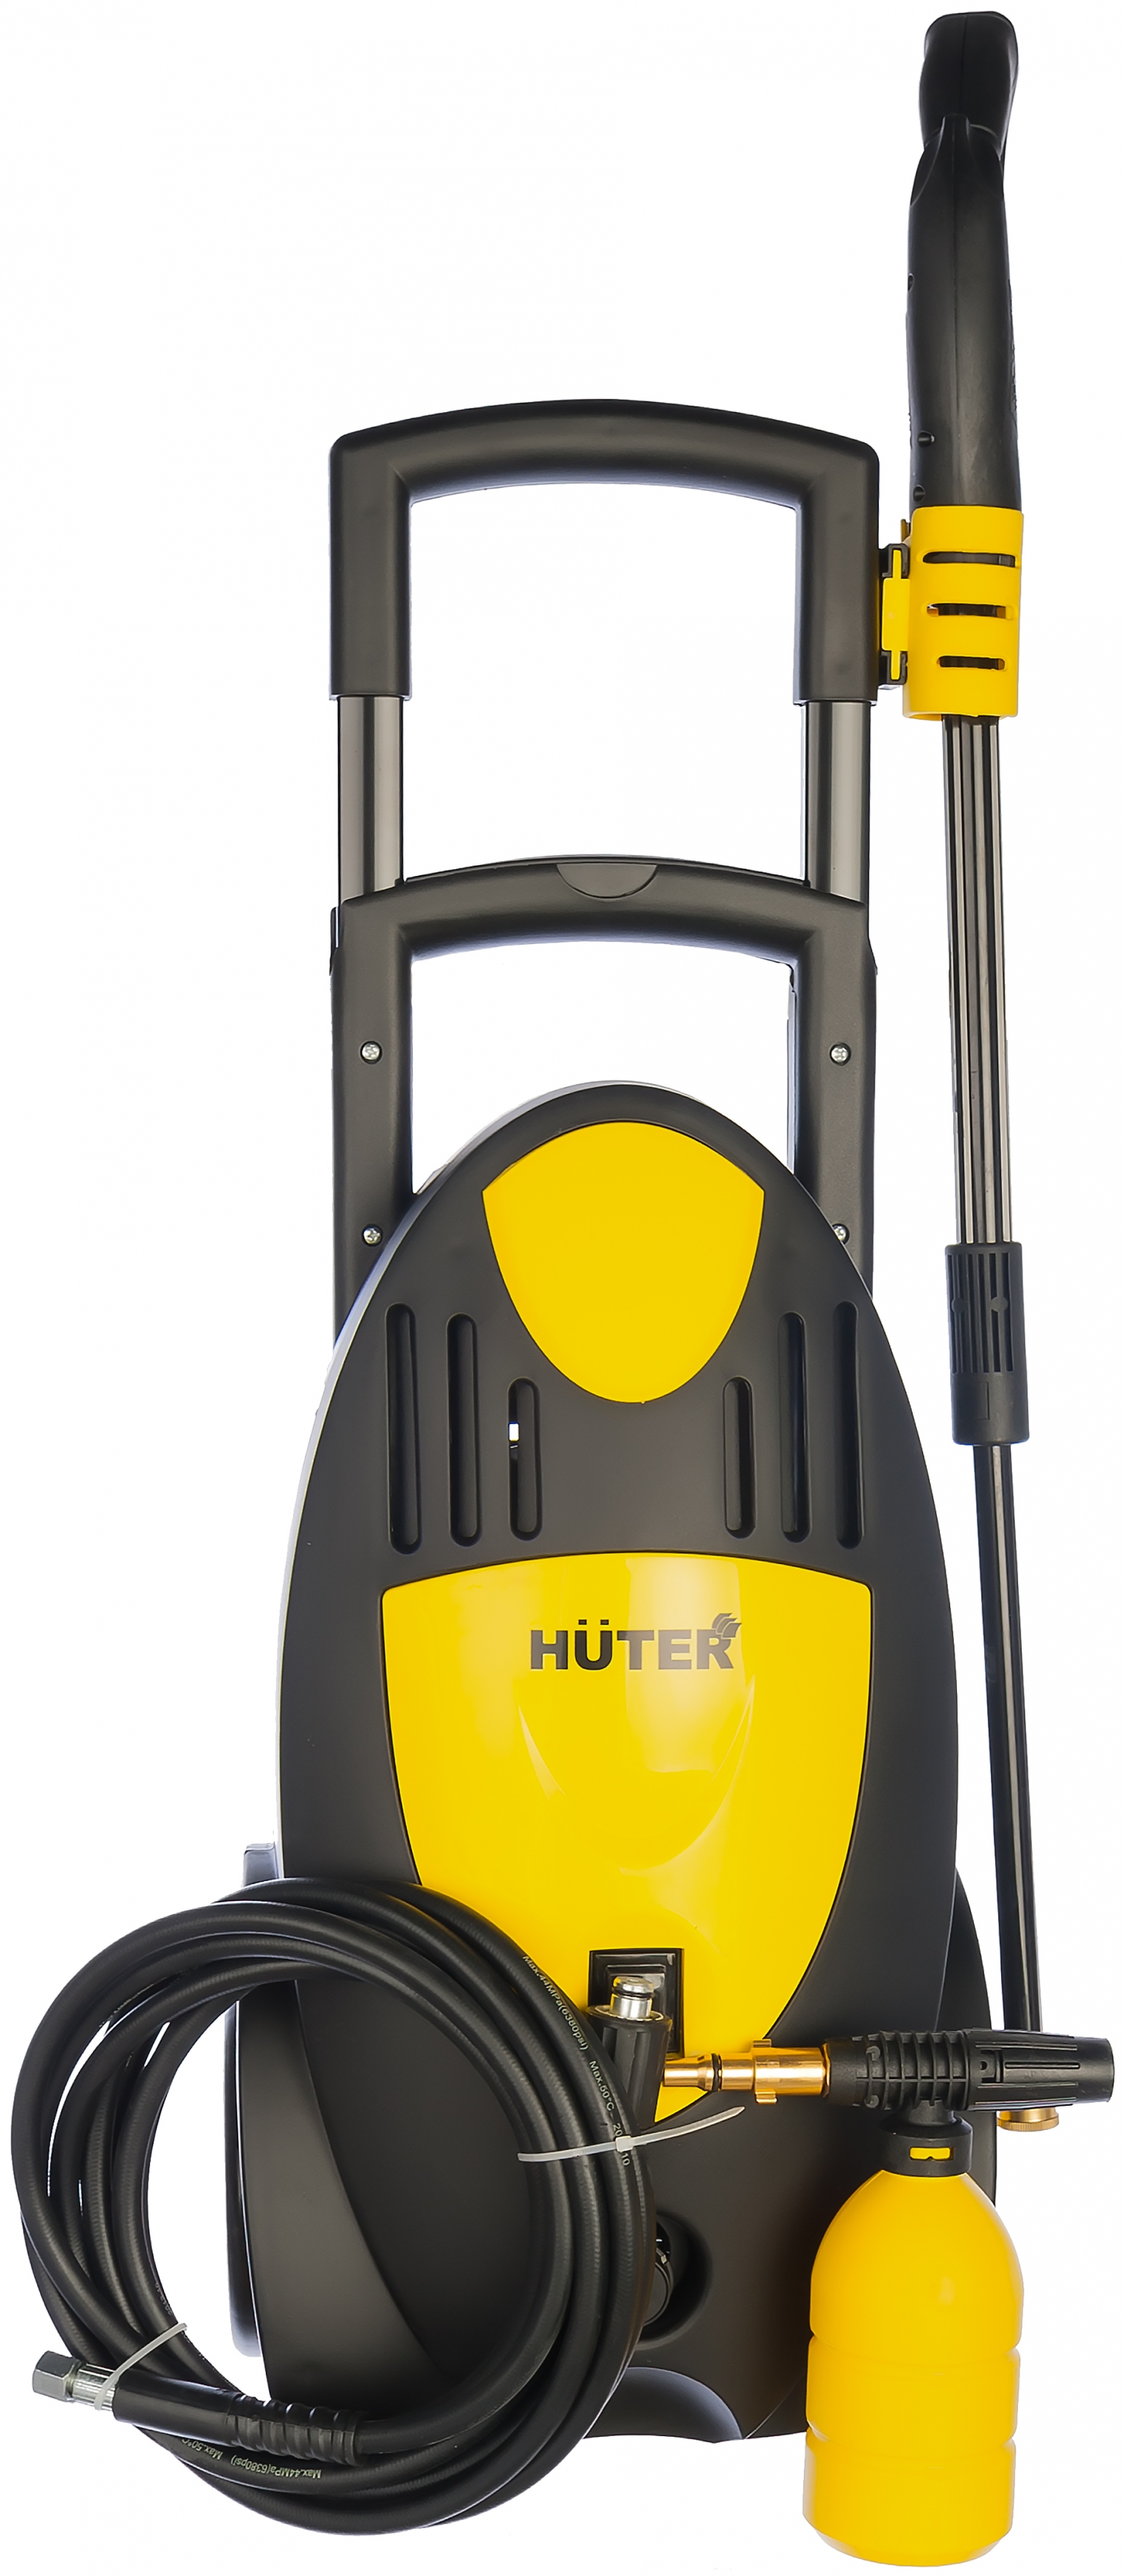 Huter M165-PW 1.9 кВт, 163 атм, 375 л/ч, 9.3 кг